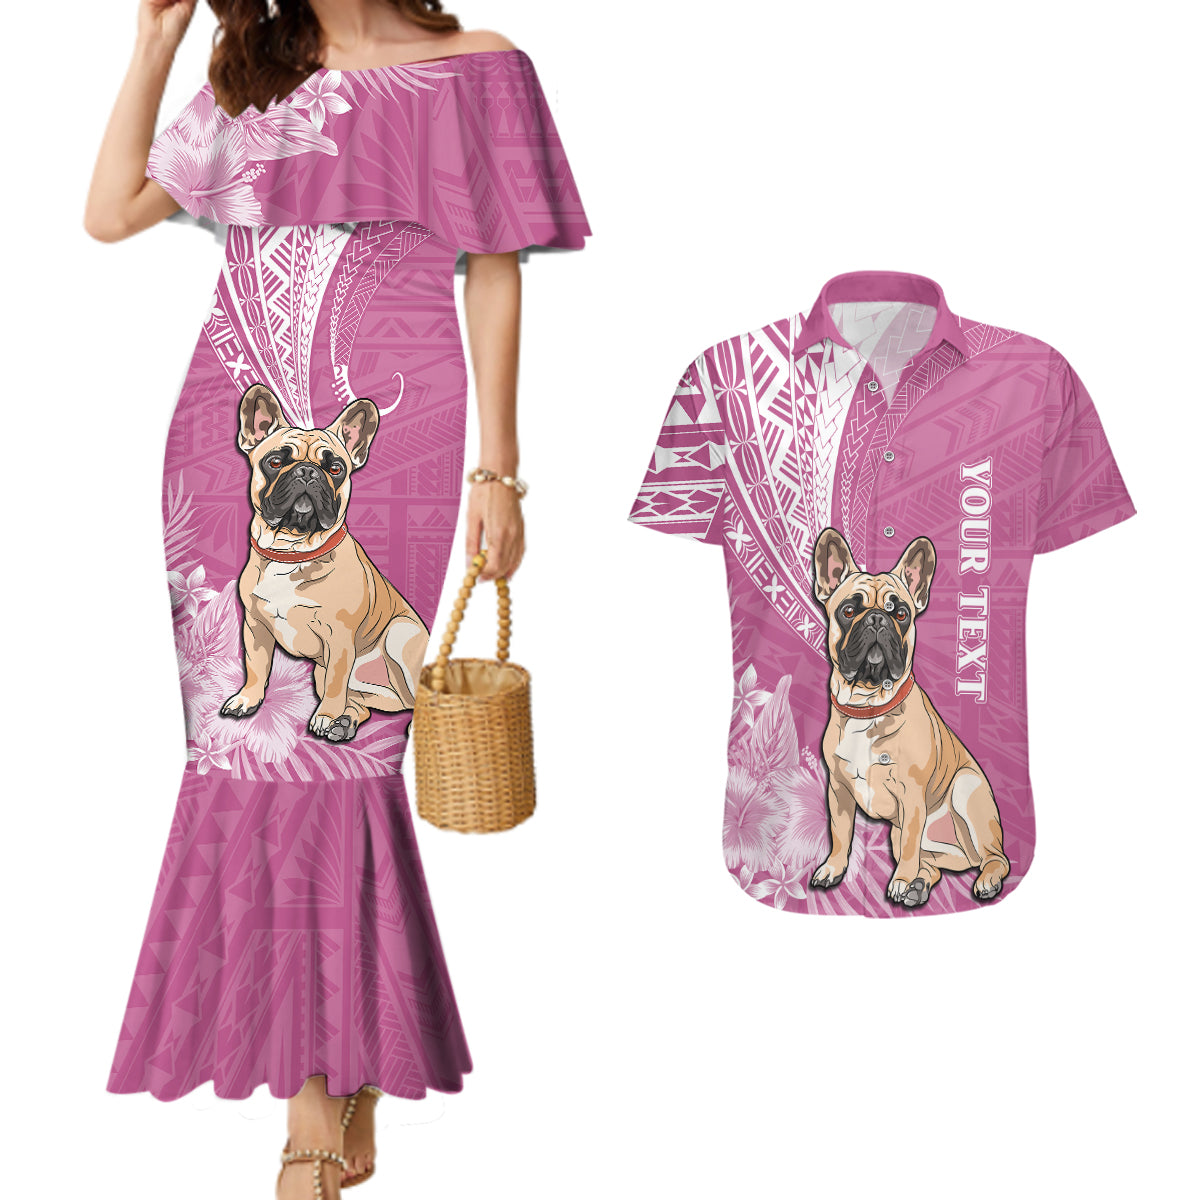 Personalised Polynesian Pacific Bulldog Couples Matching Mermaid Dress And Hawaiian Shirt With Pink Hawaii Tribal Tattoo Patterns LT7 Pink - Polynesian Pride